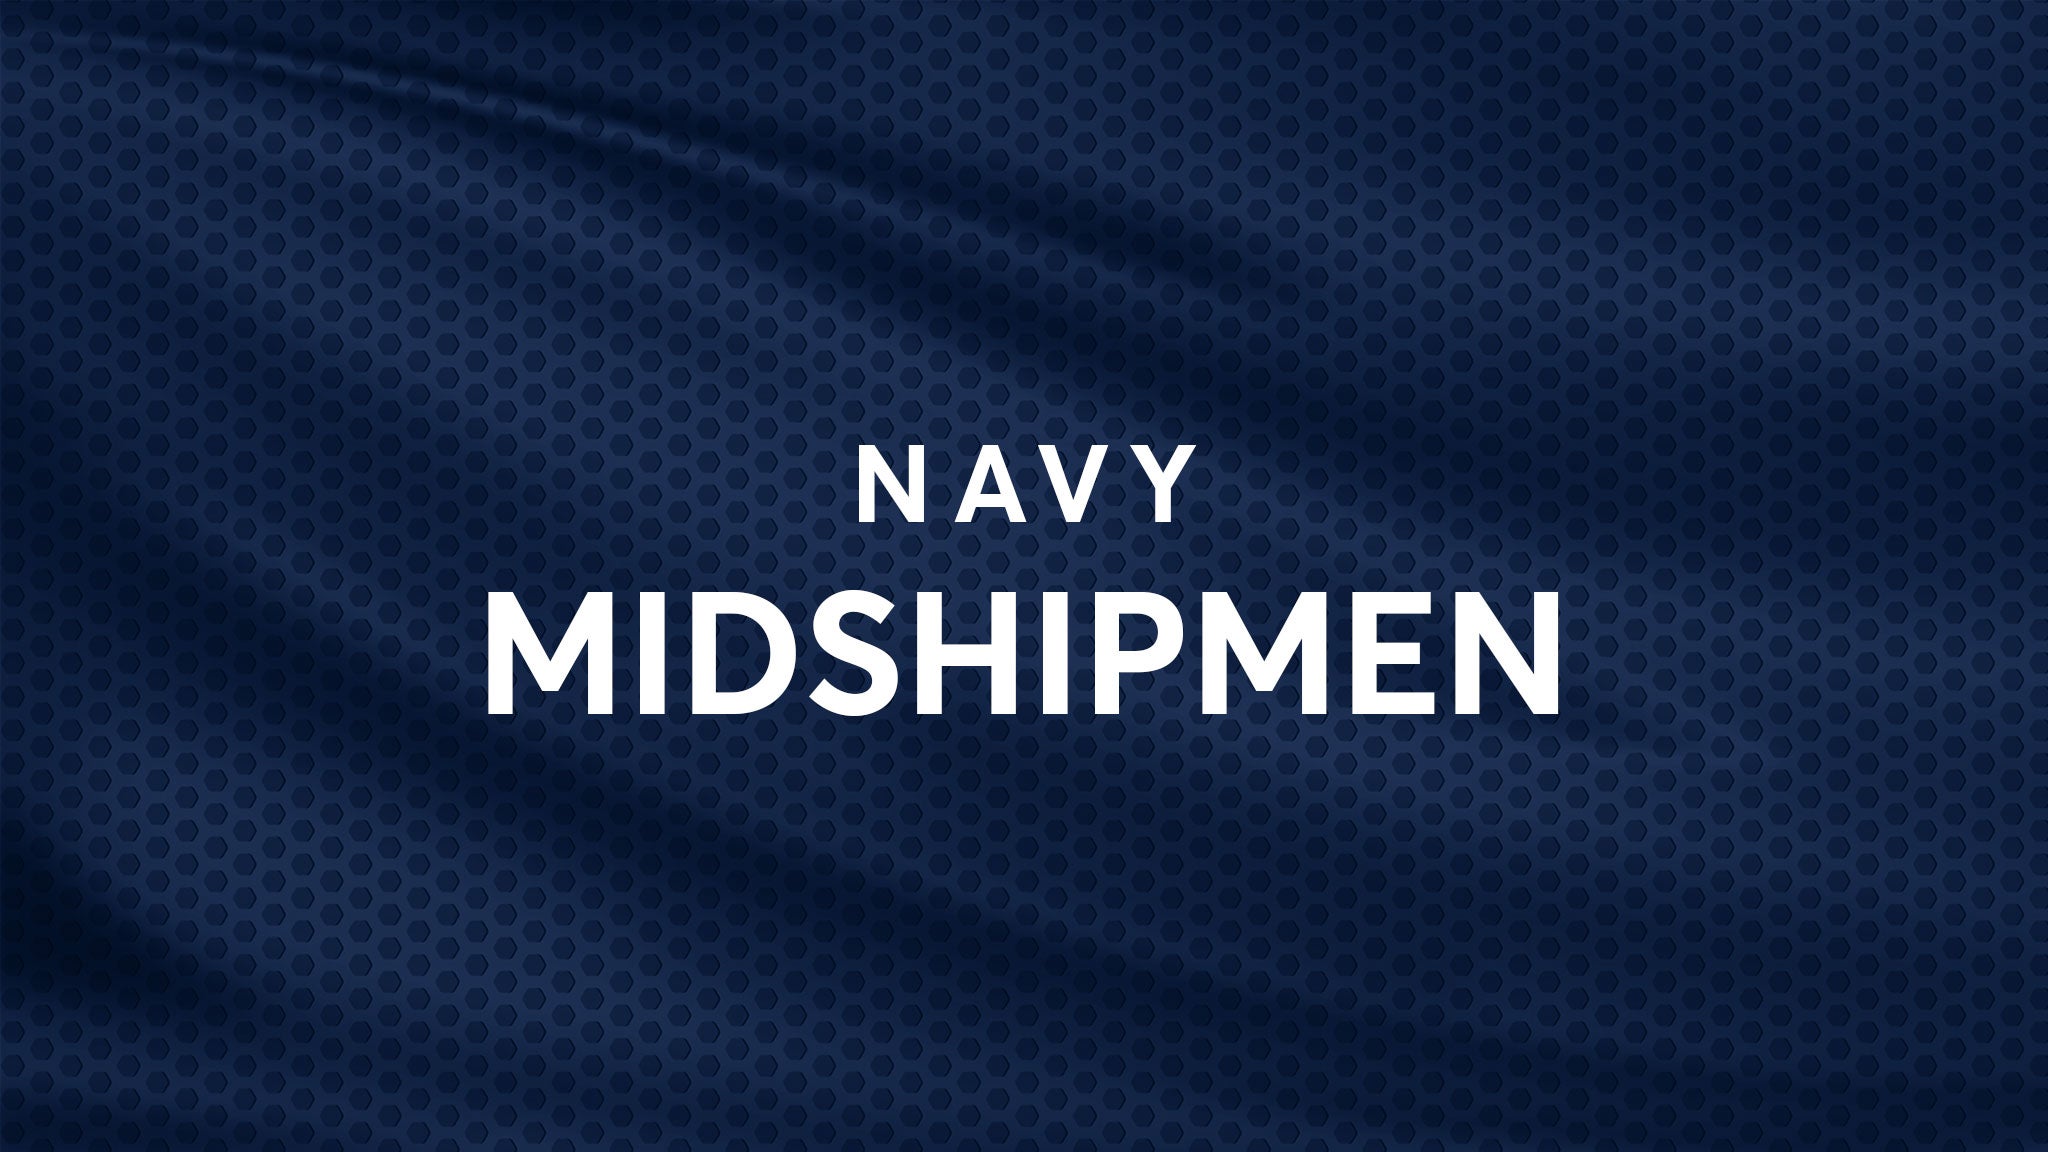 Navy Midshipmen Football vs. Temple Owls Football hero